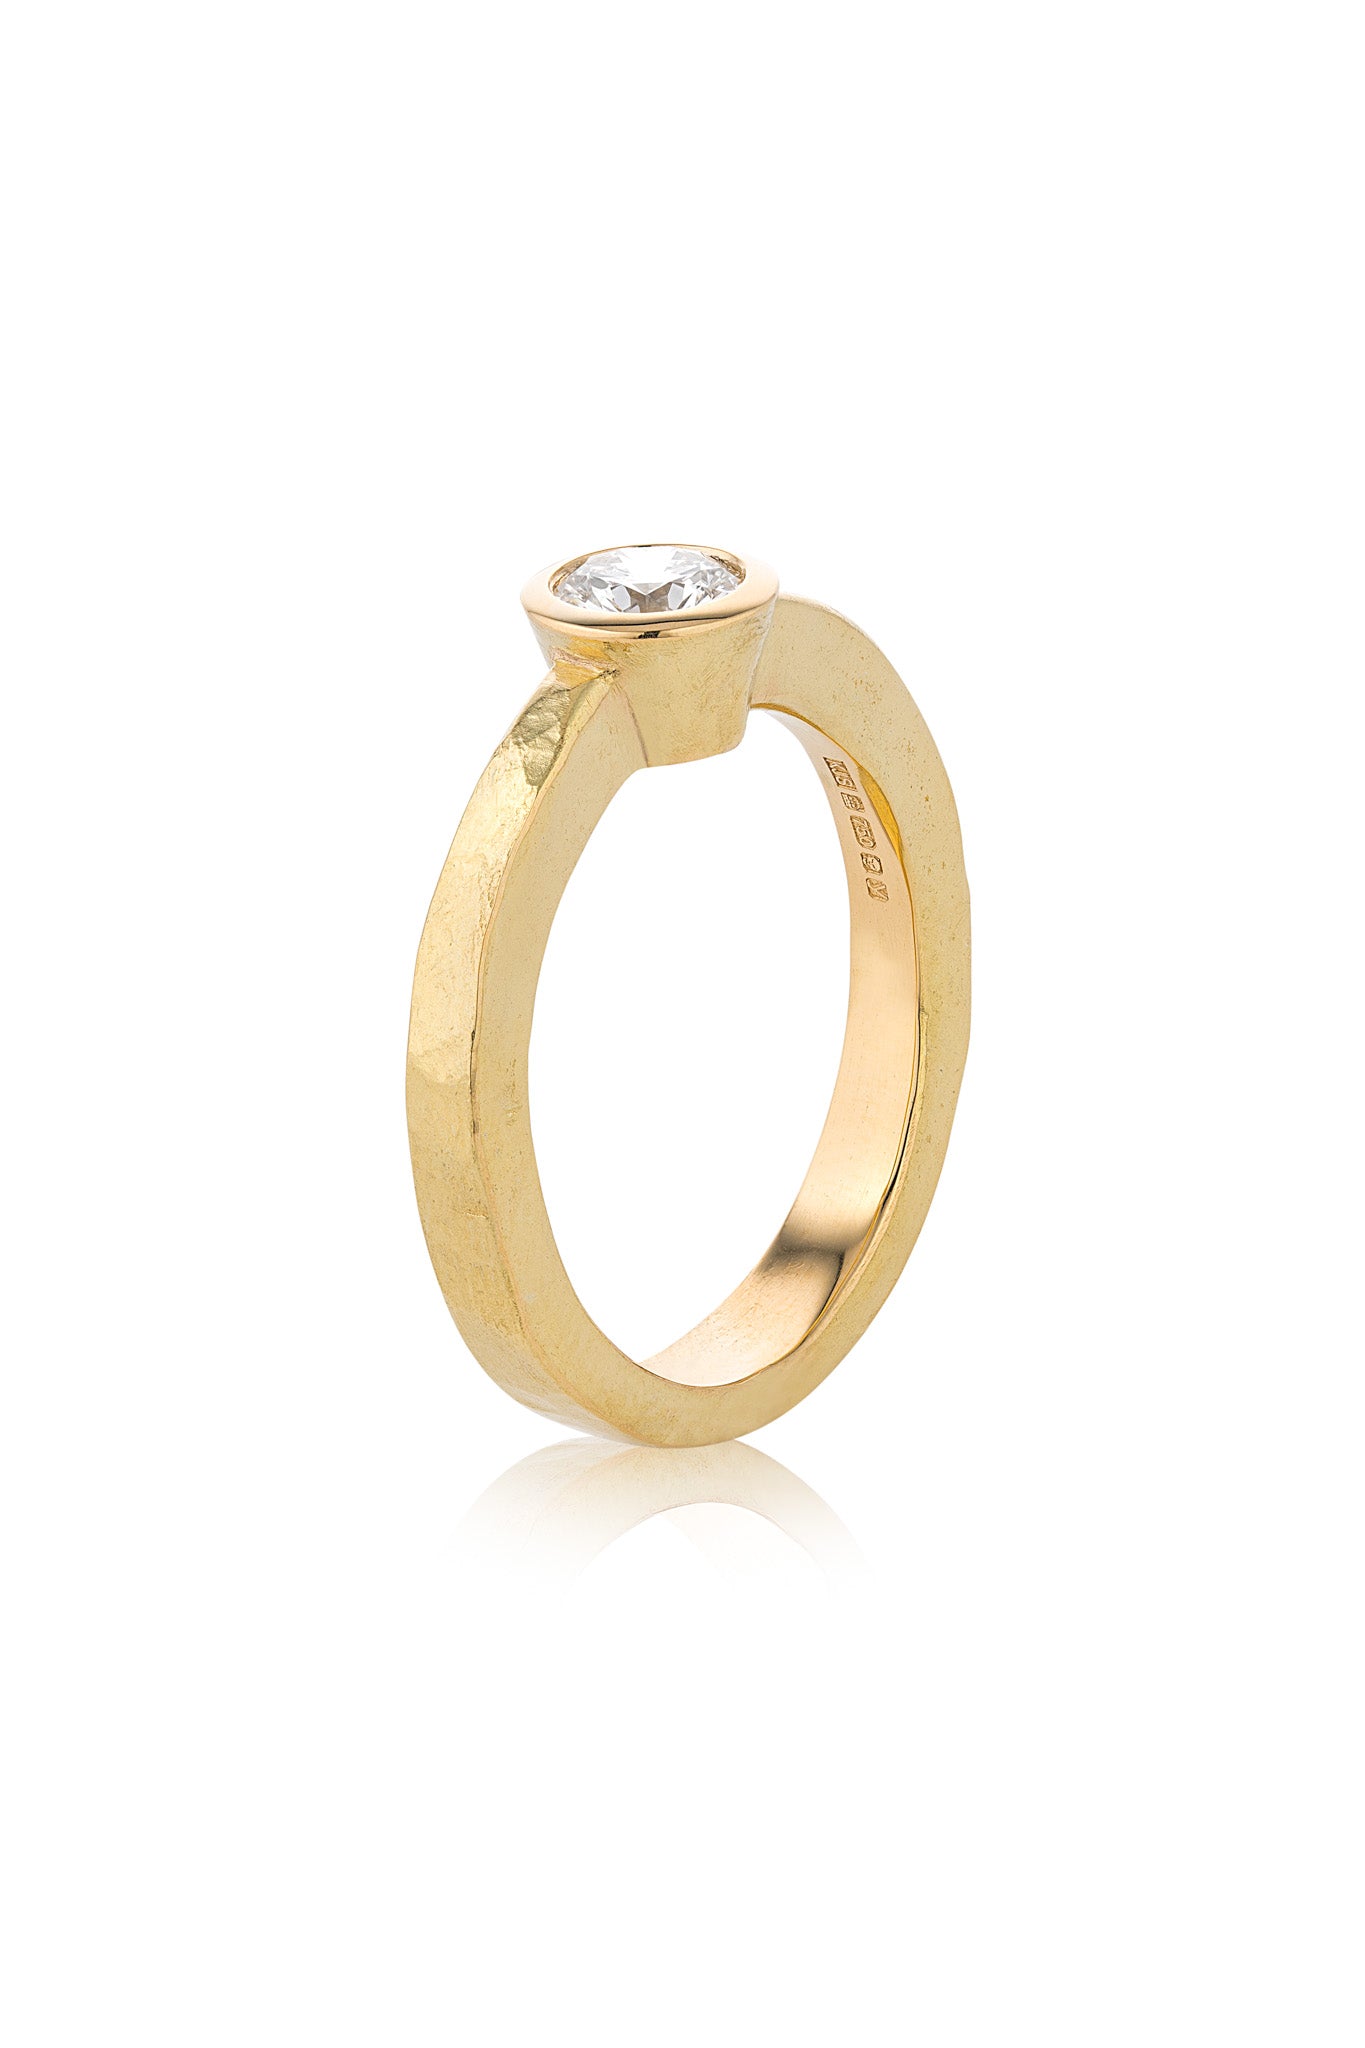 Bespoke 18ct yellow gold diamond engagement ring